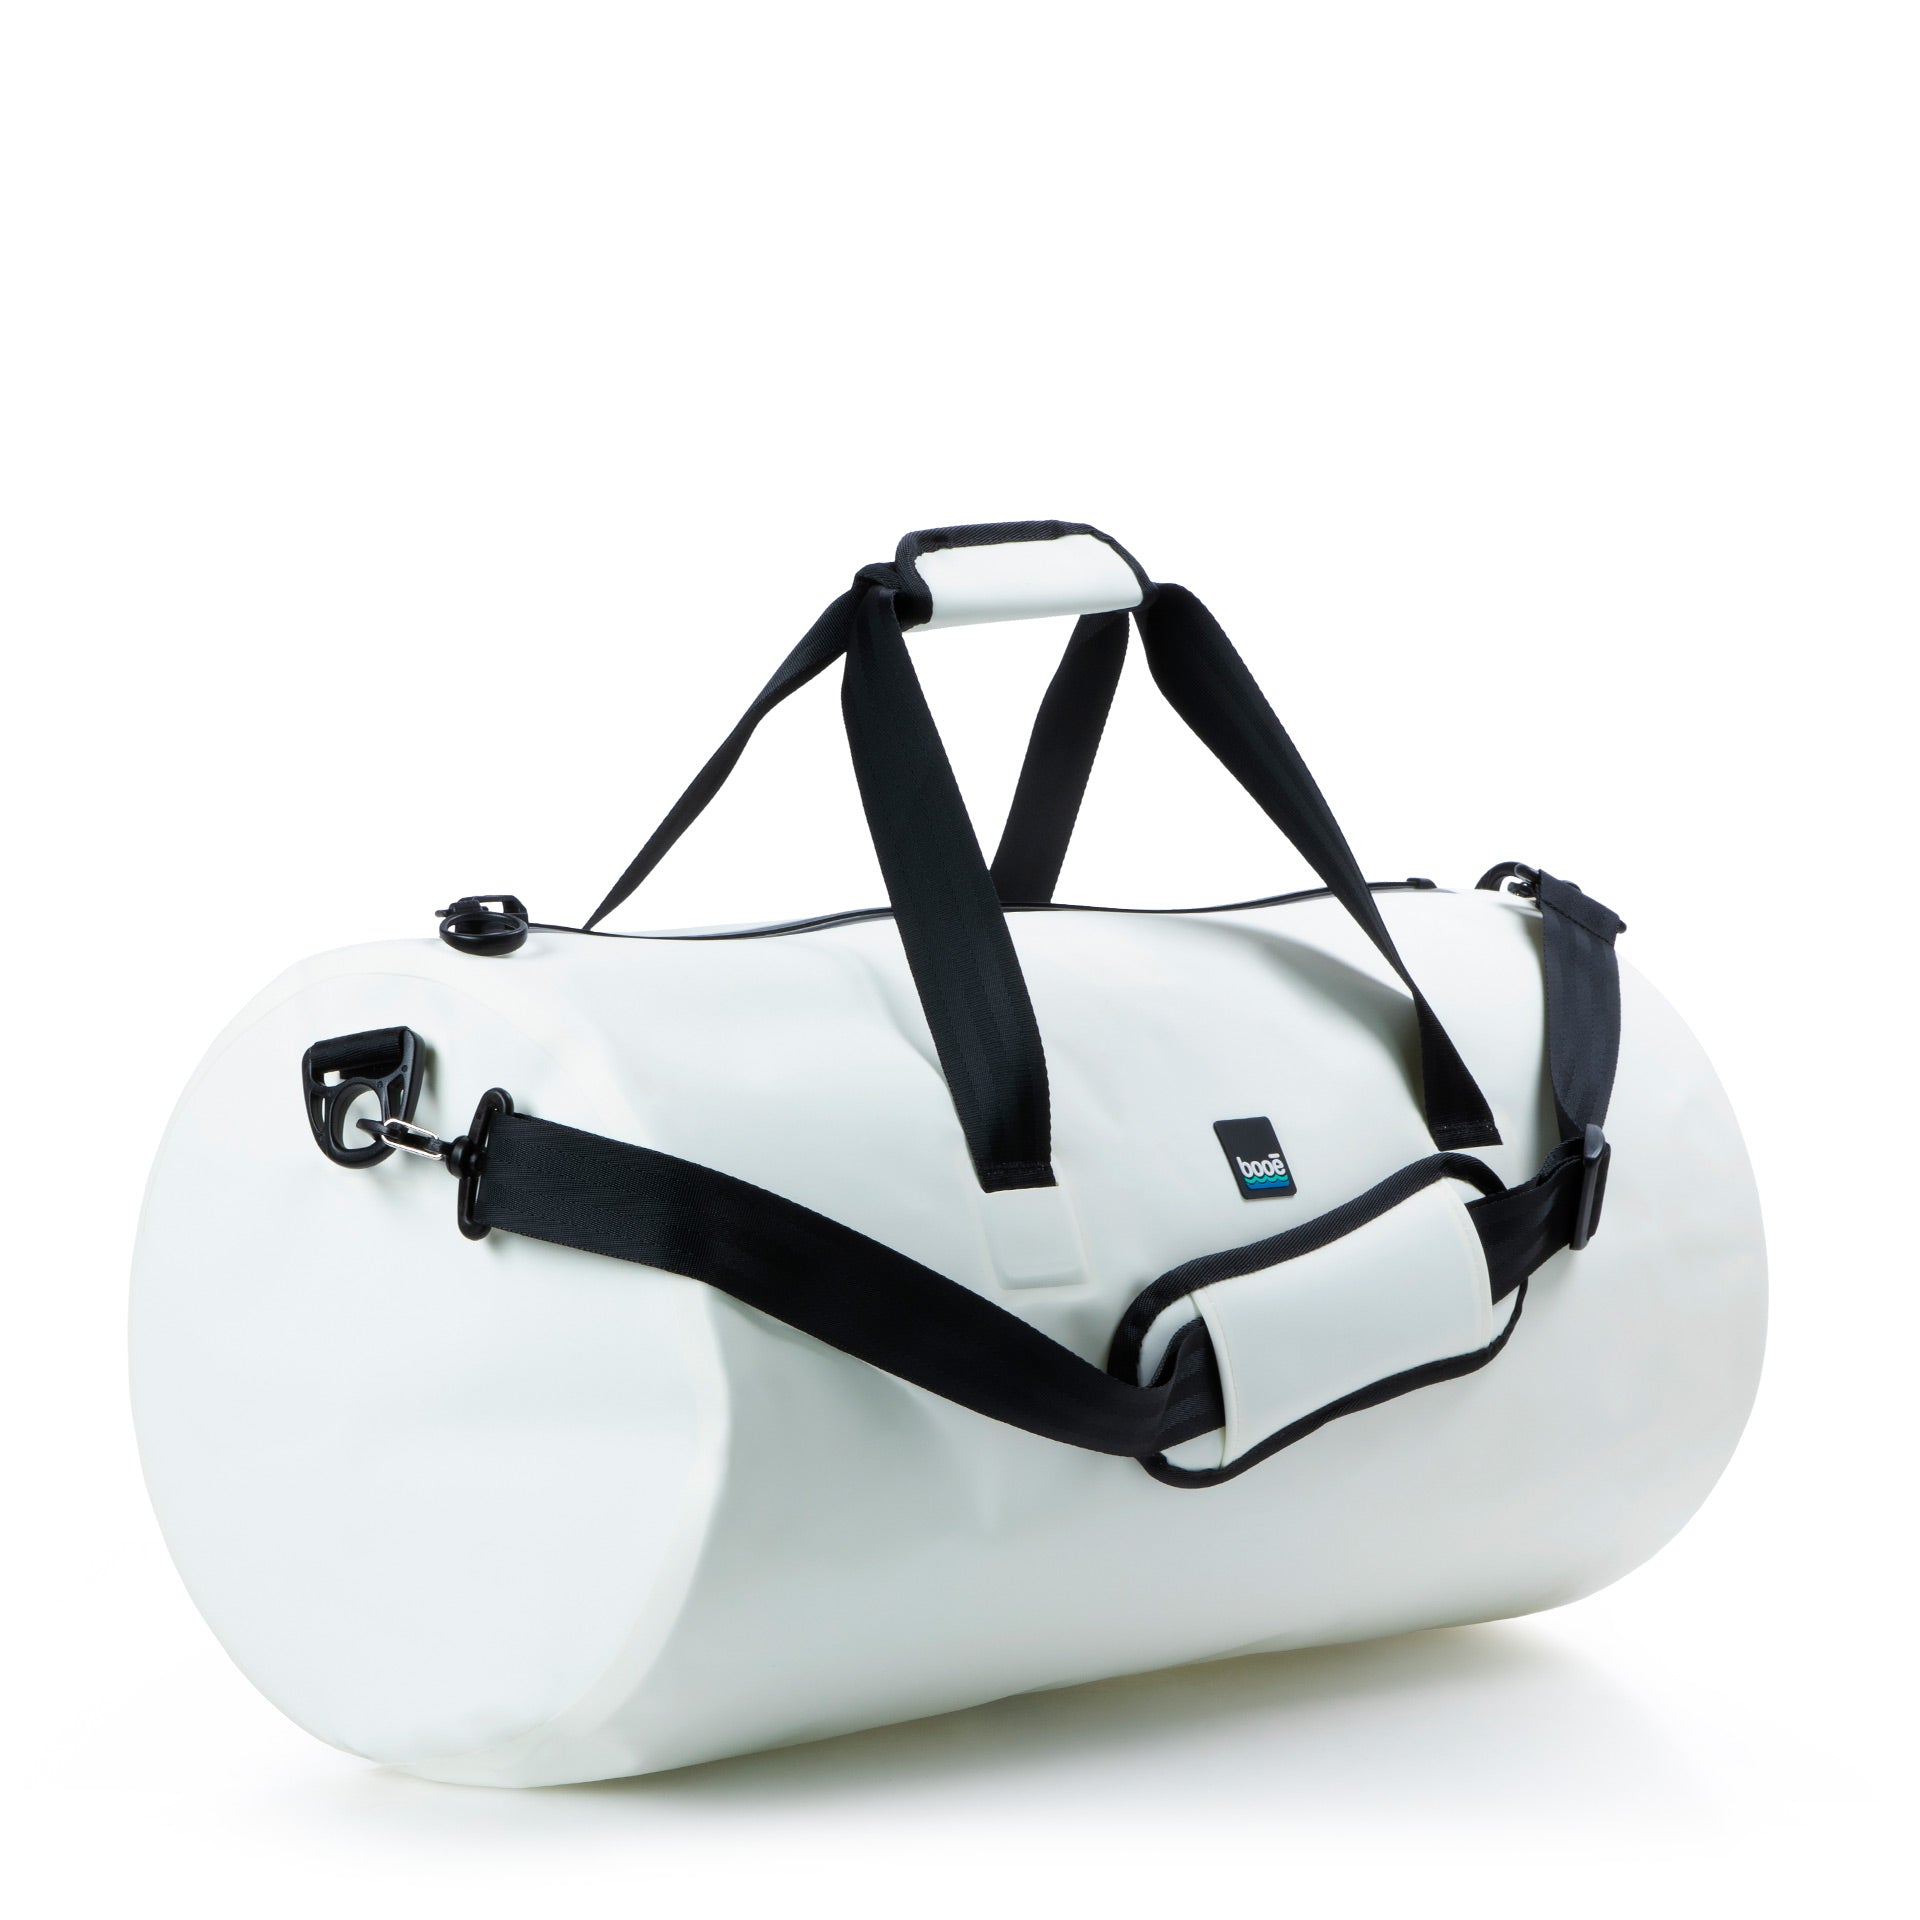 Booe 45L Waterproof Duffel - Fully Submersible Dry Bag – Booē